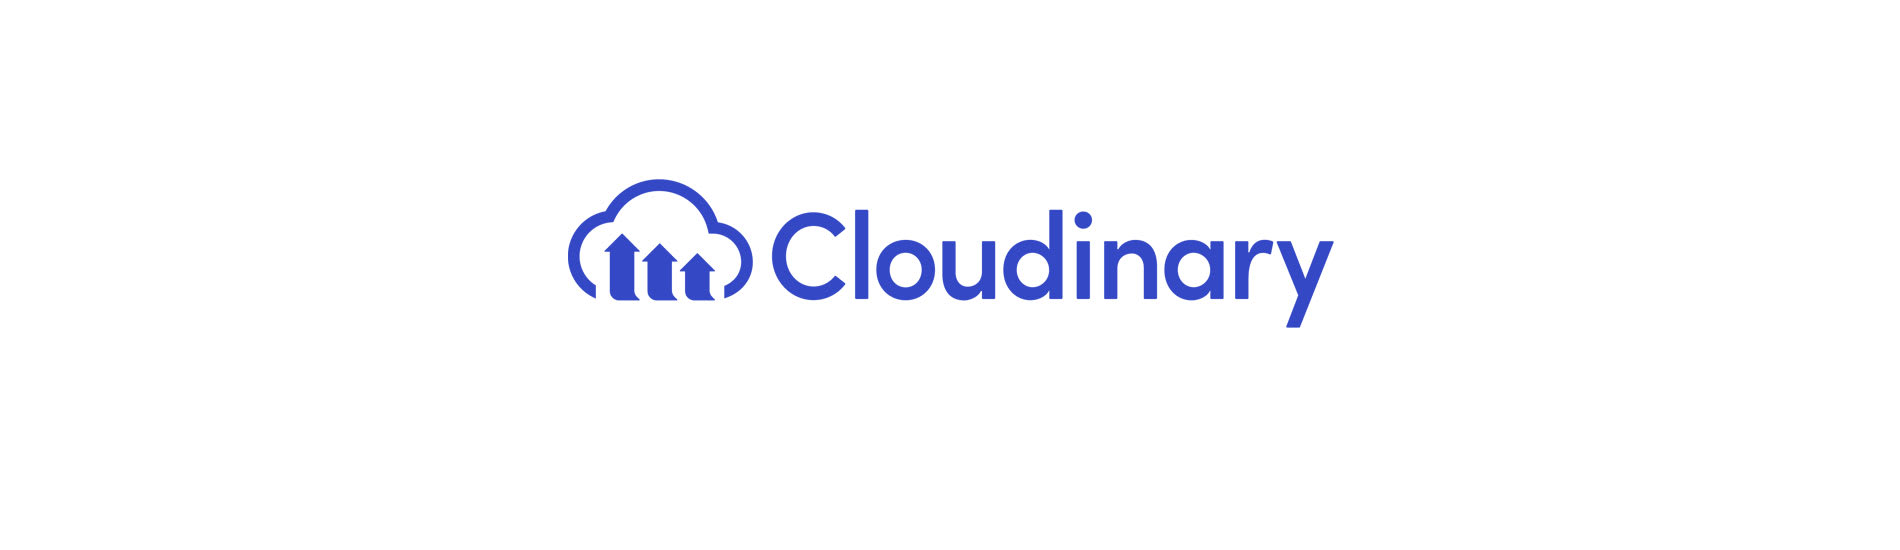 Cloudinary Logo)